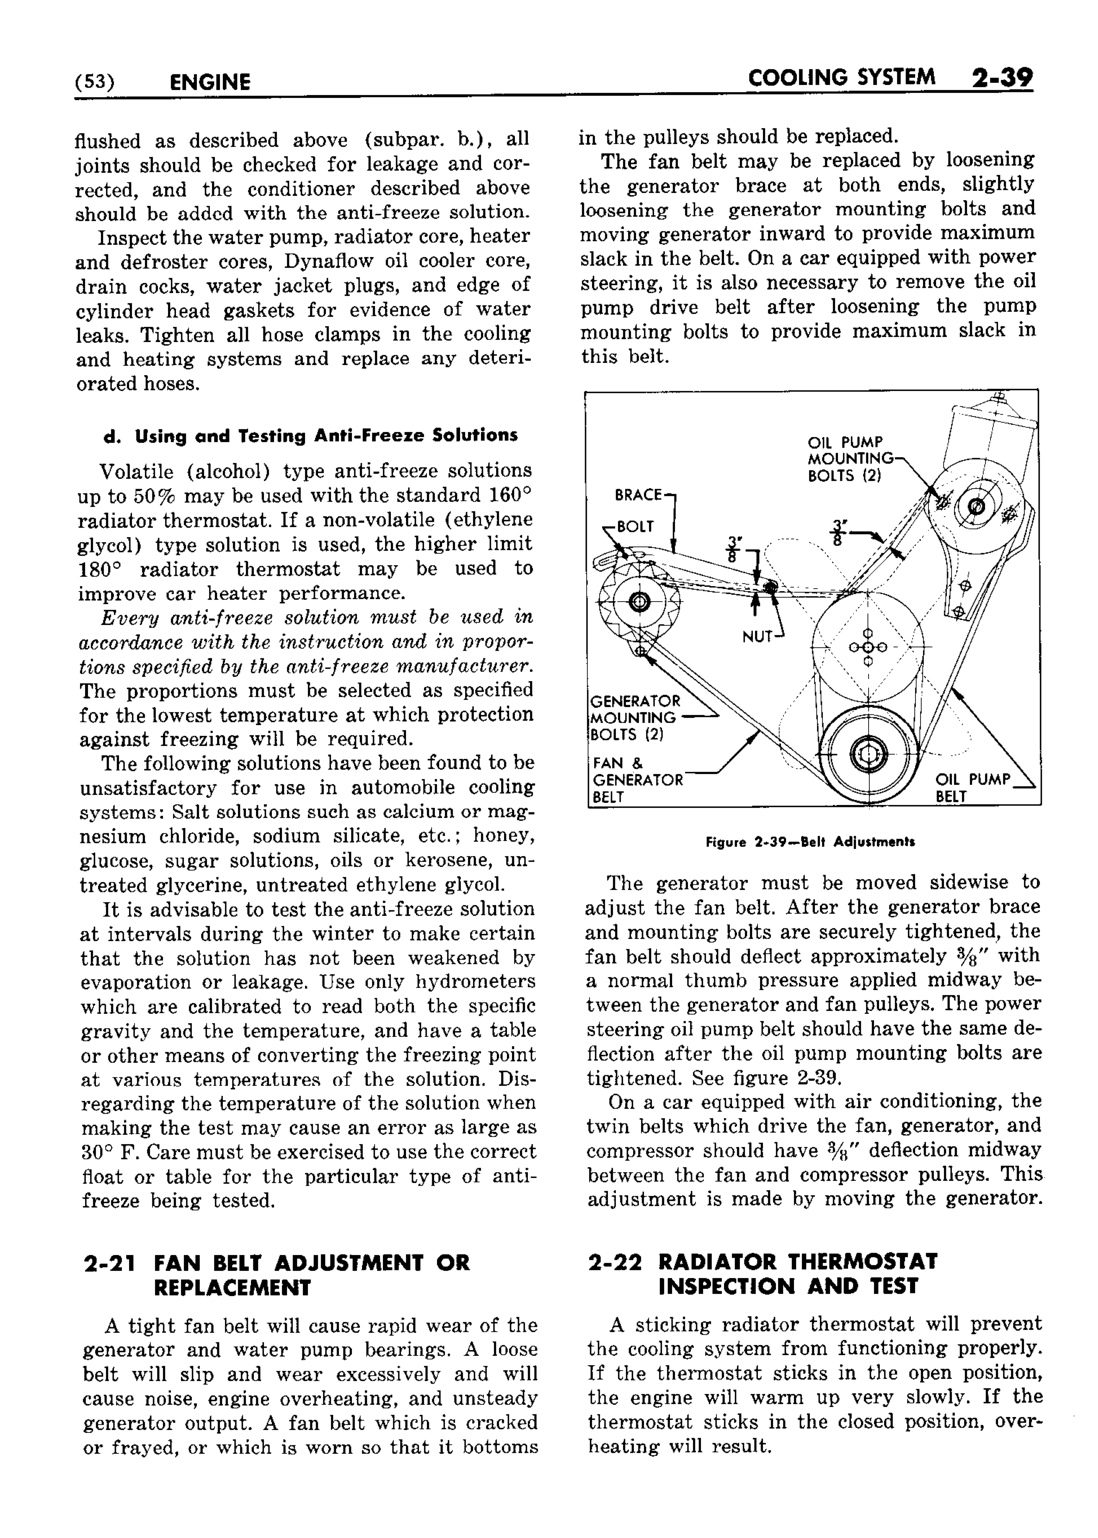 n_03 1953 Buick Shop Manual - Engine-039-039.jpg